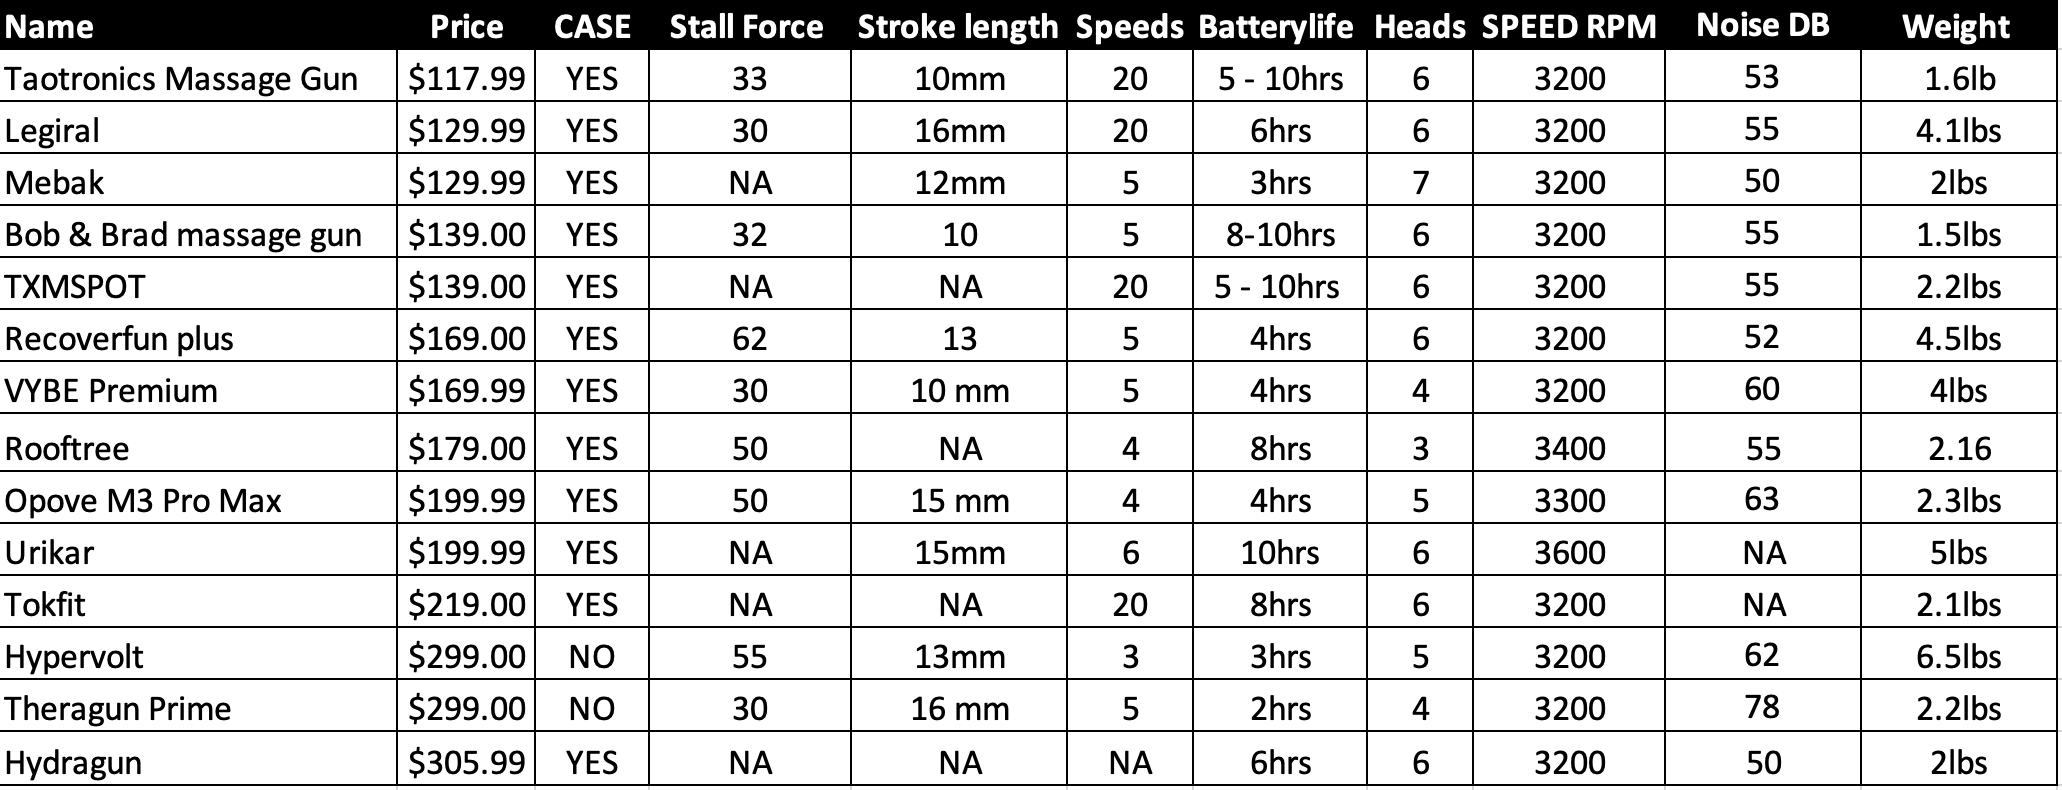 Premium Massage Gun Options List reviewed price speed noise weight stall force